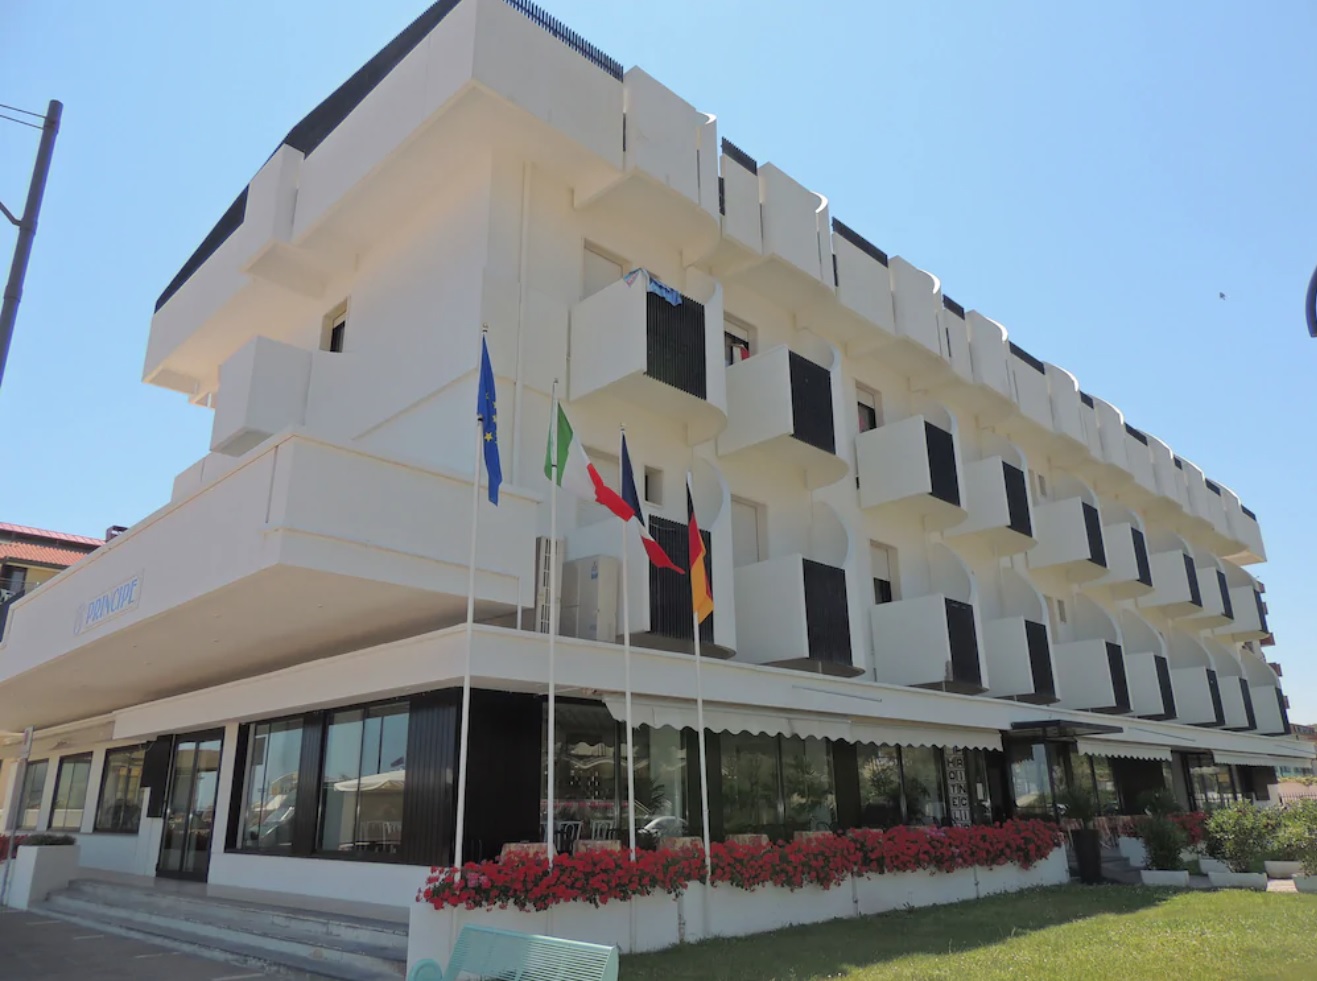 Hotel Principe - Bellaria (RN)